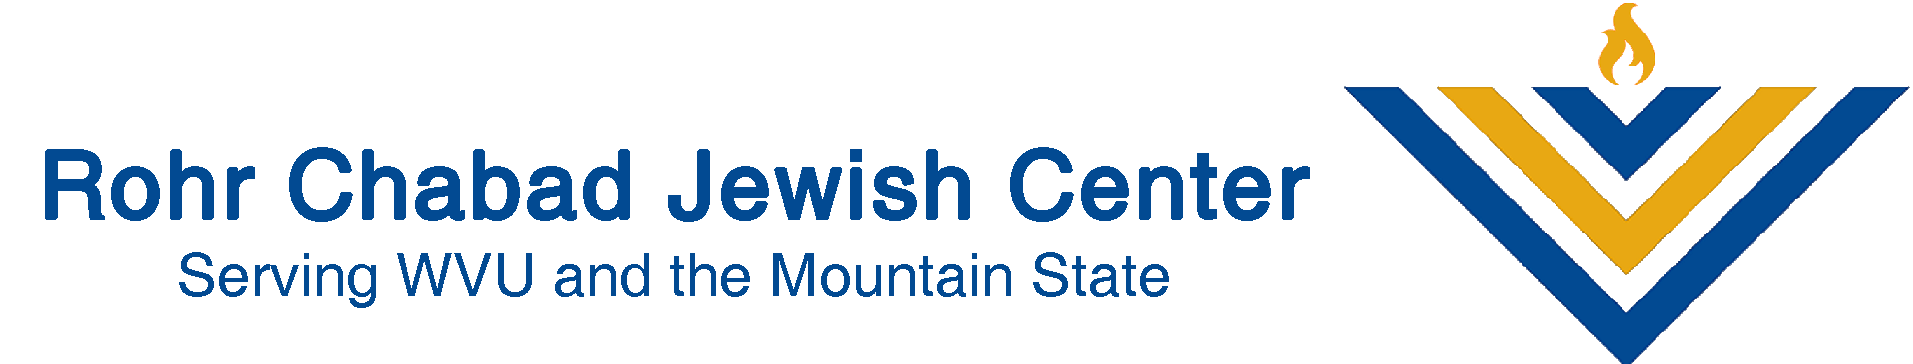 Rohr Chabad Jewish Center